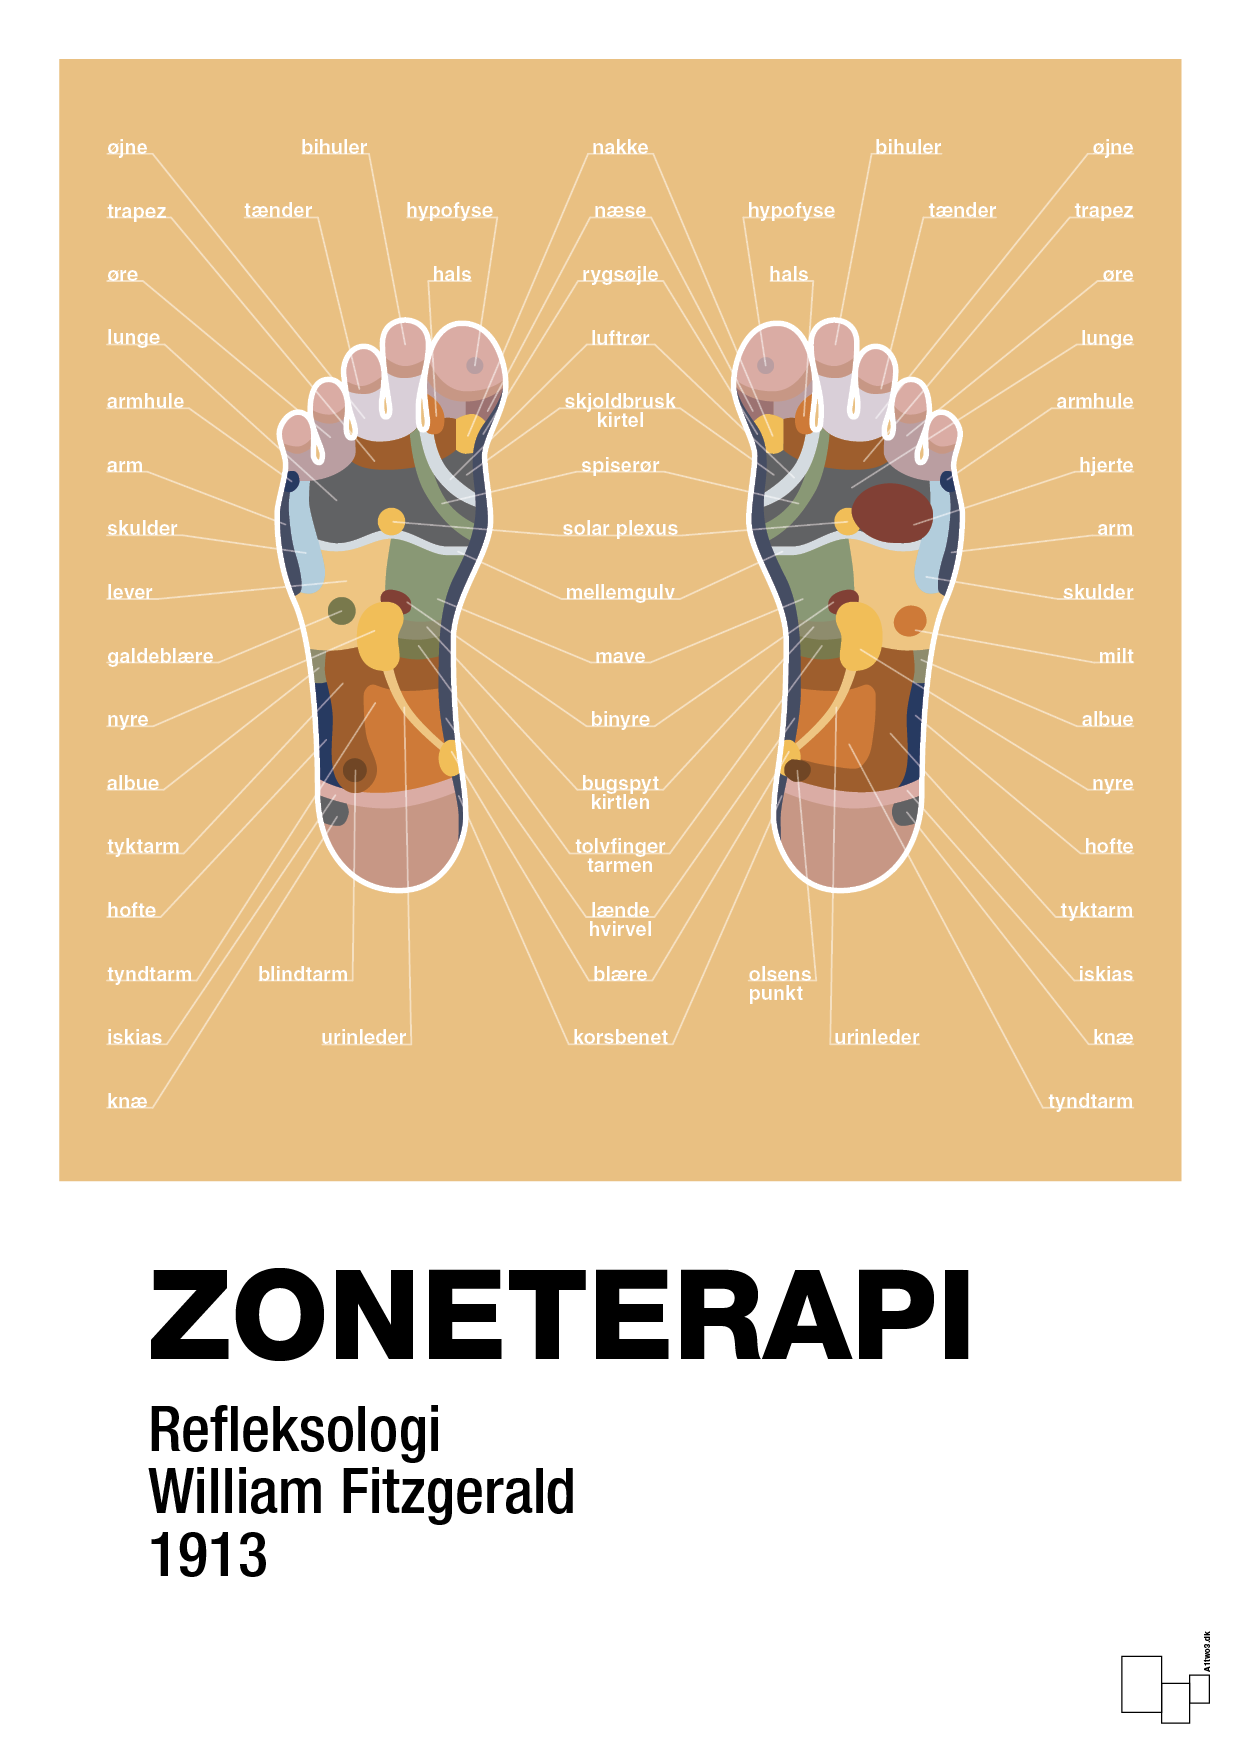 zoneterapi - Plakat med Videnskab i Charismatic